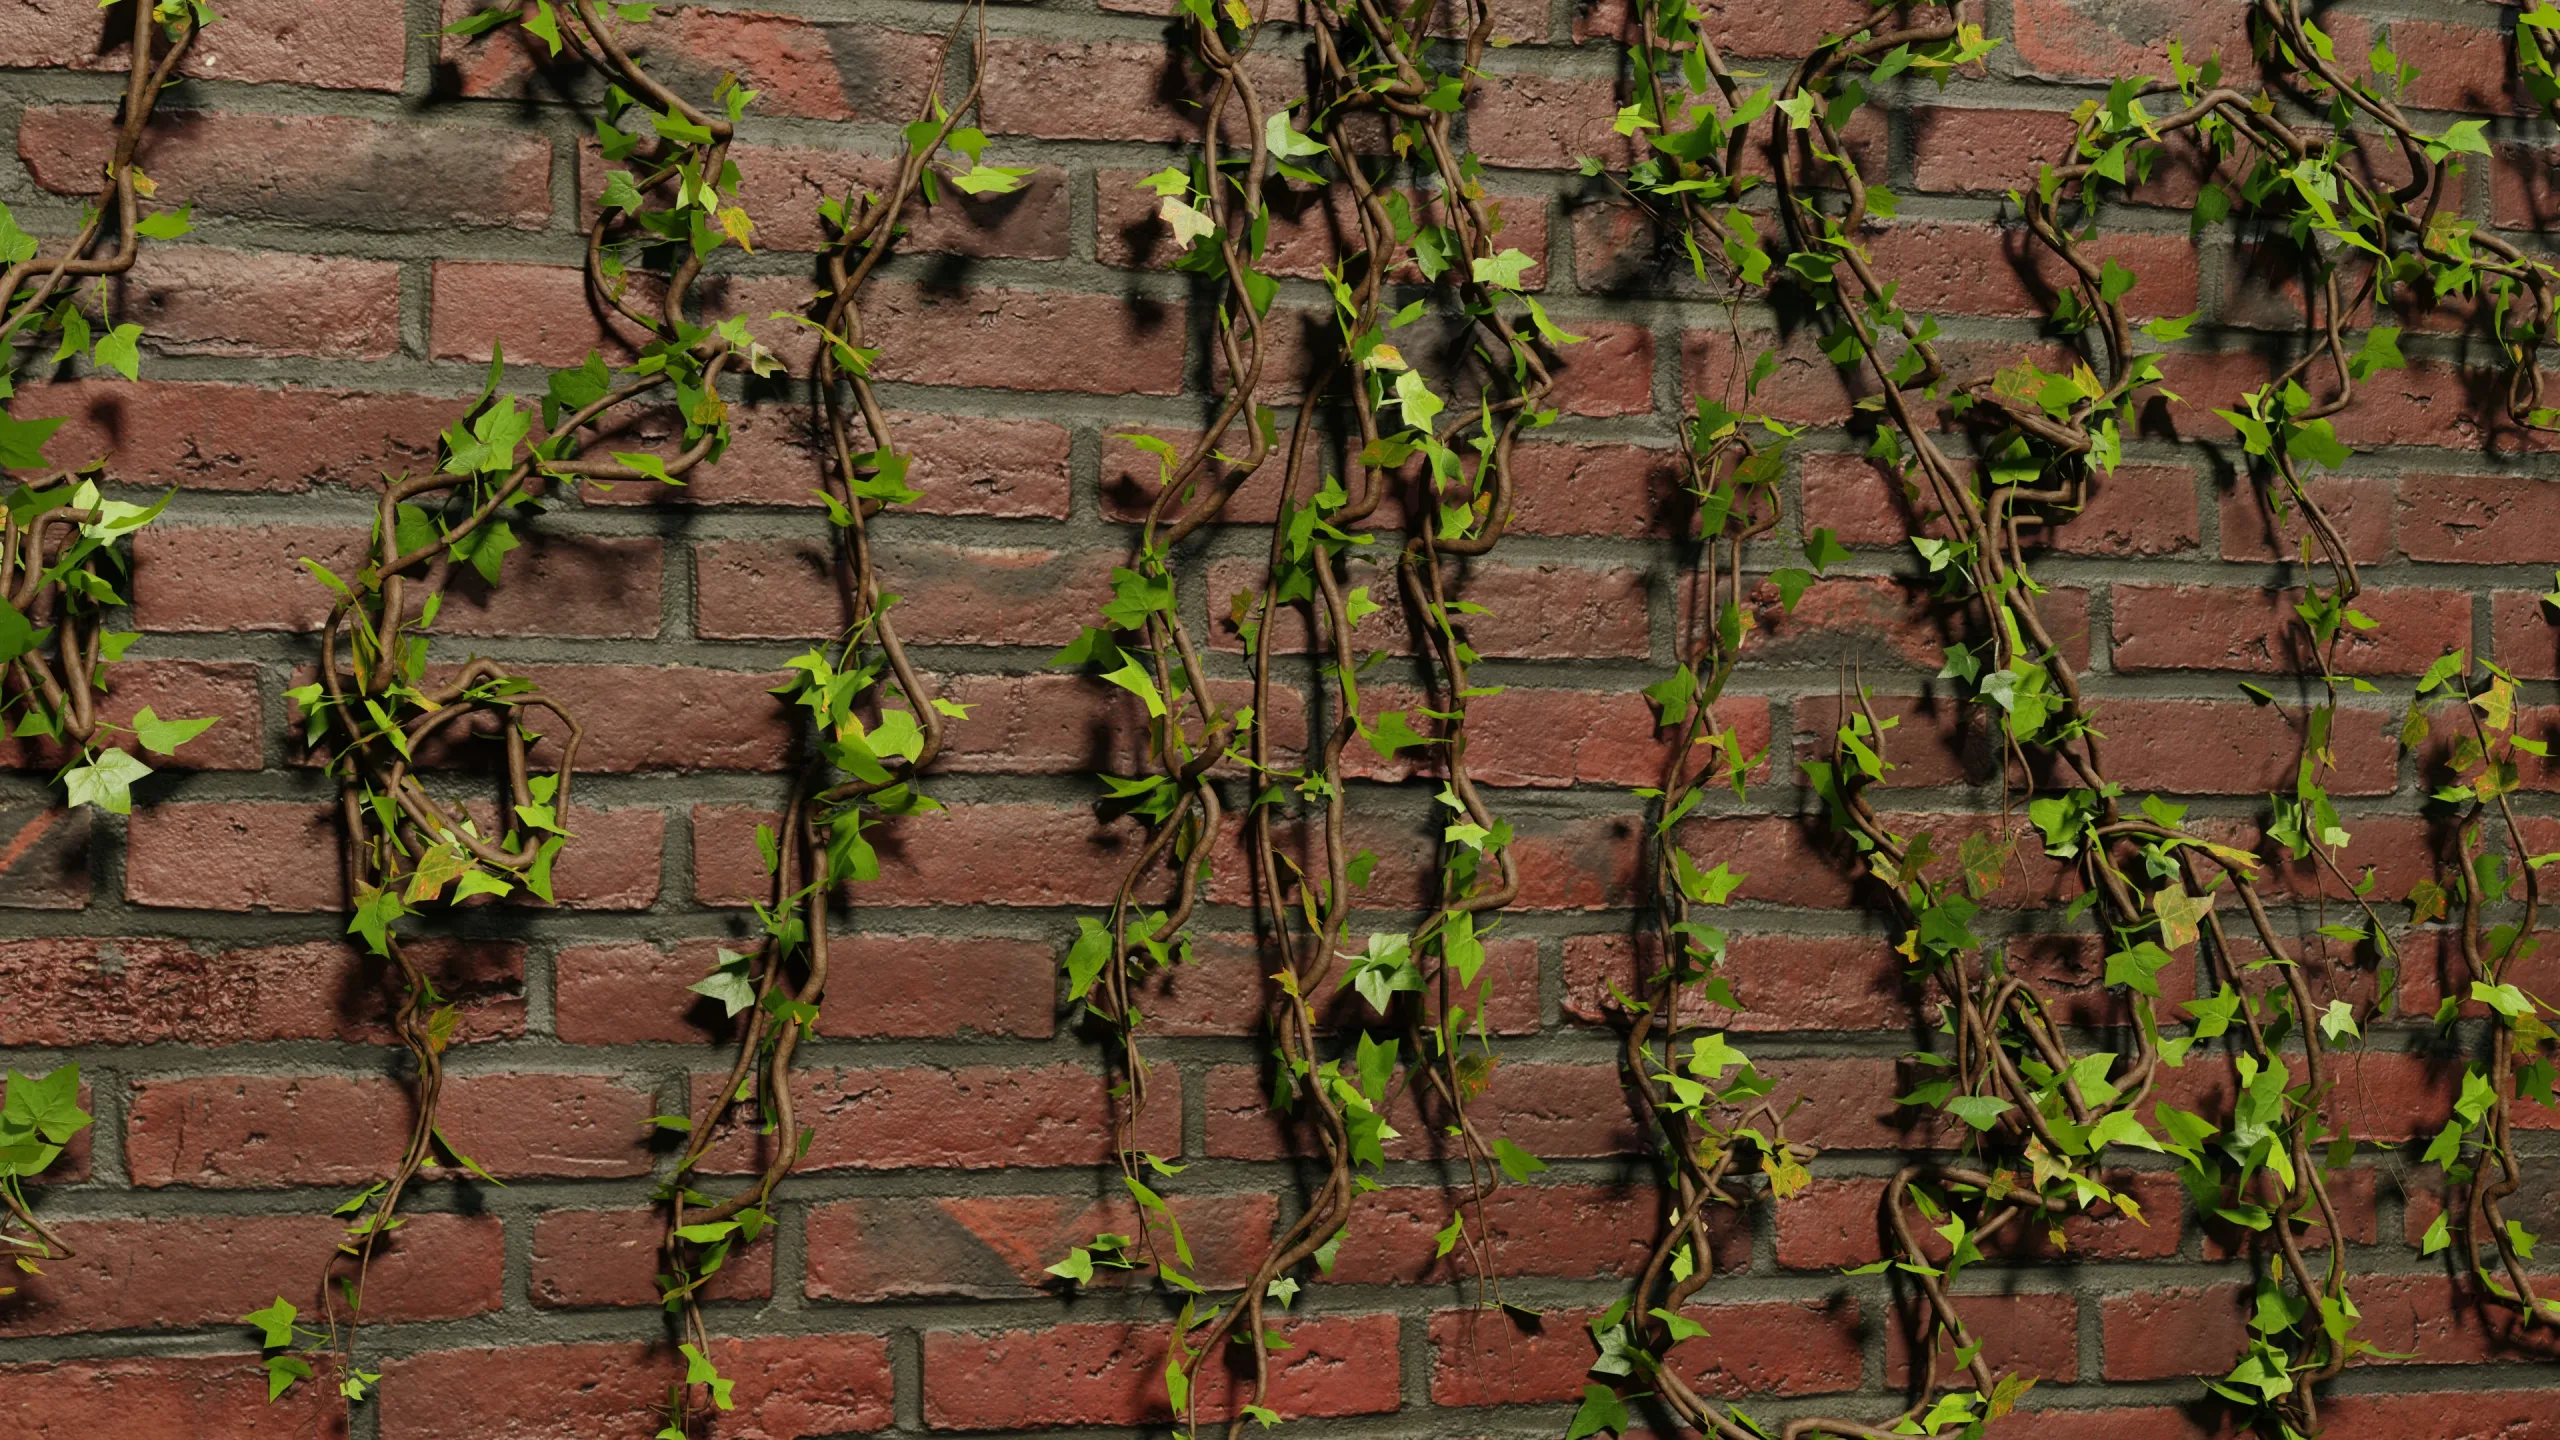 Ivy and Vines - Geometry Nodes (Blender)